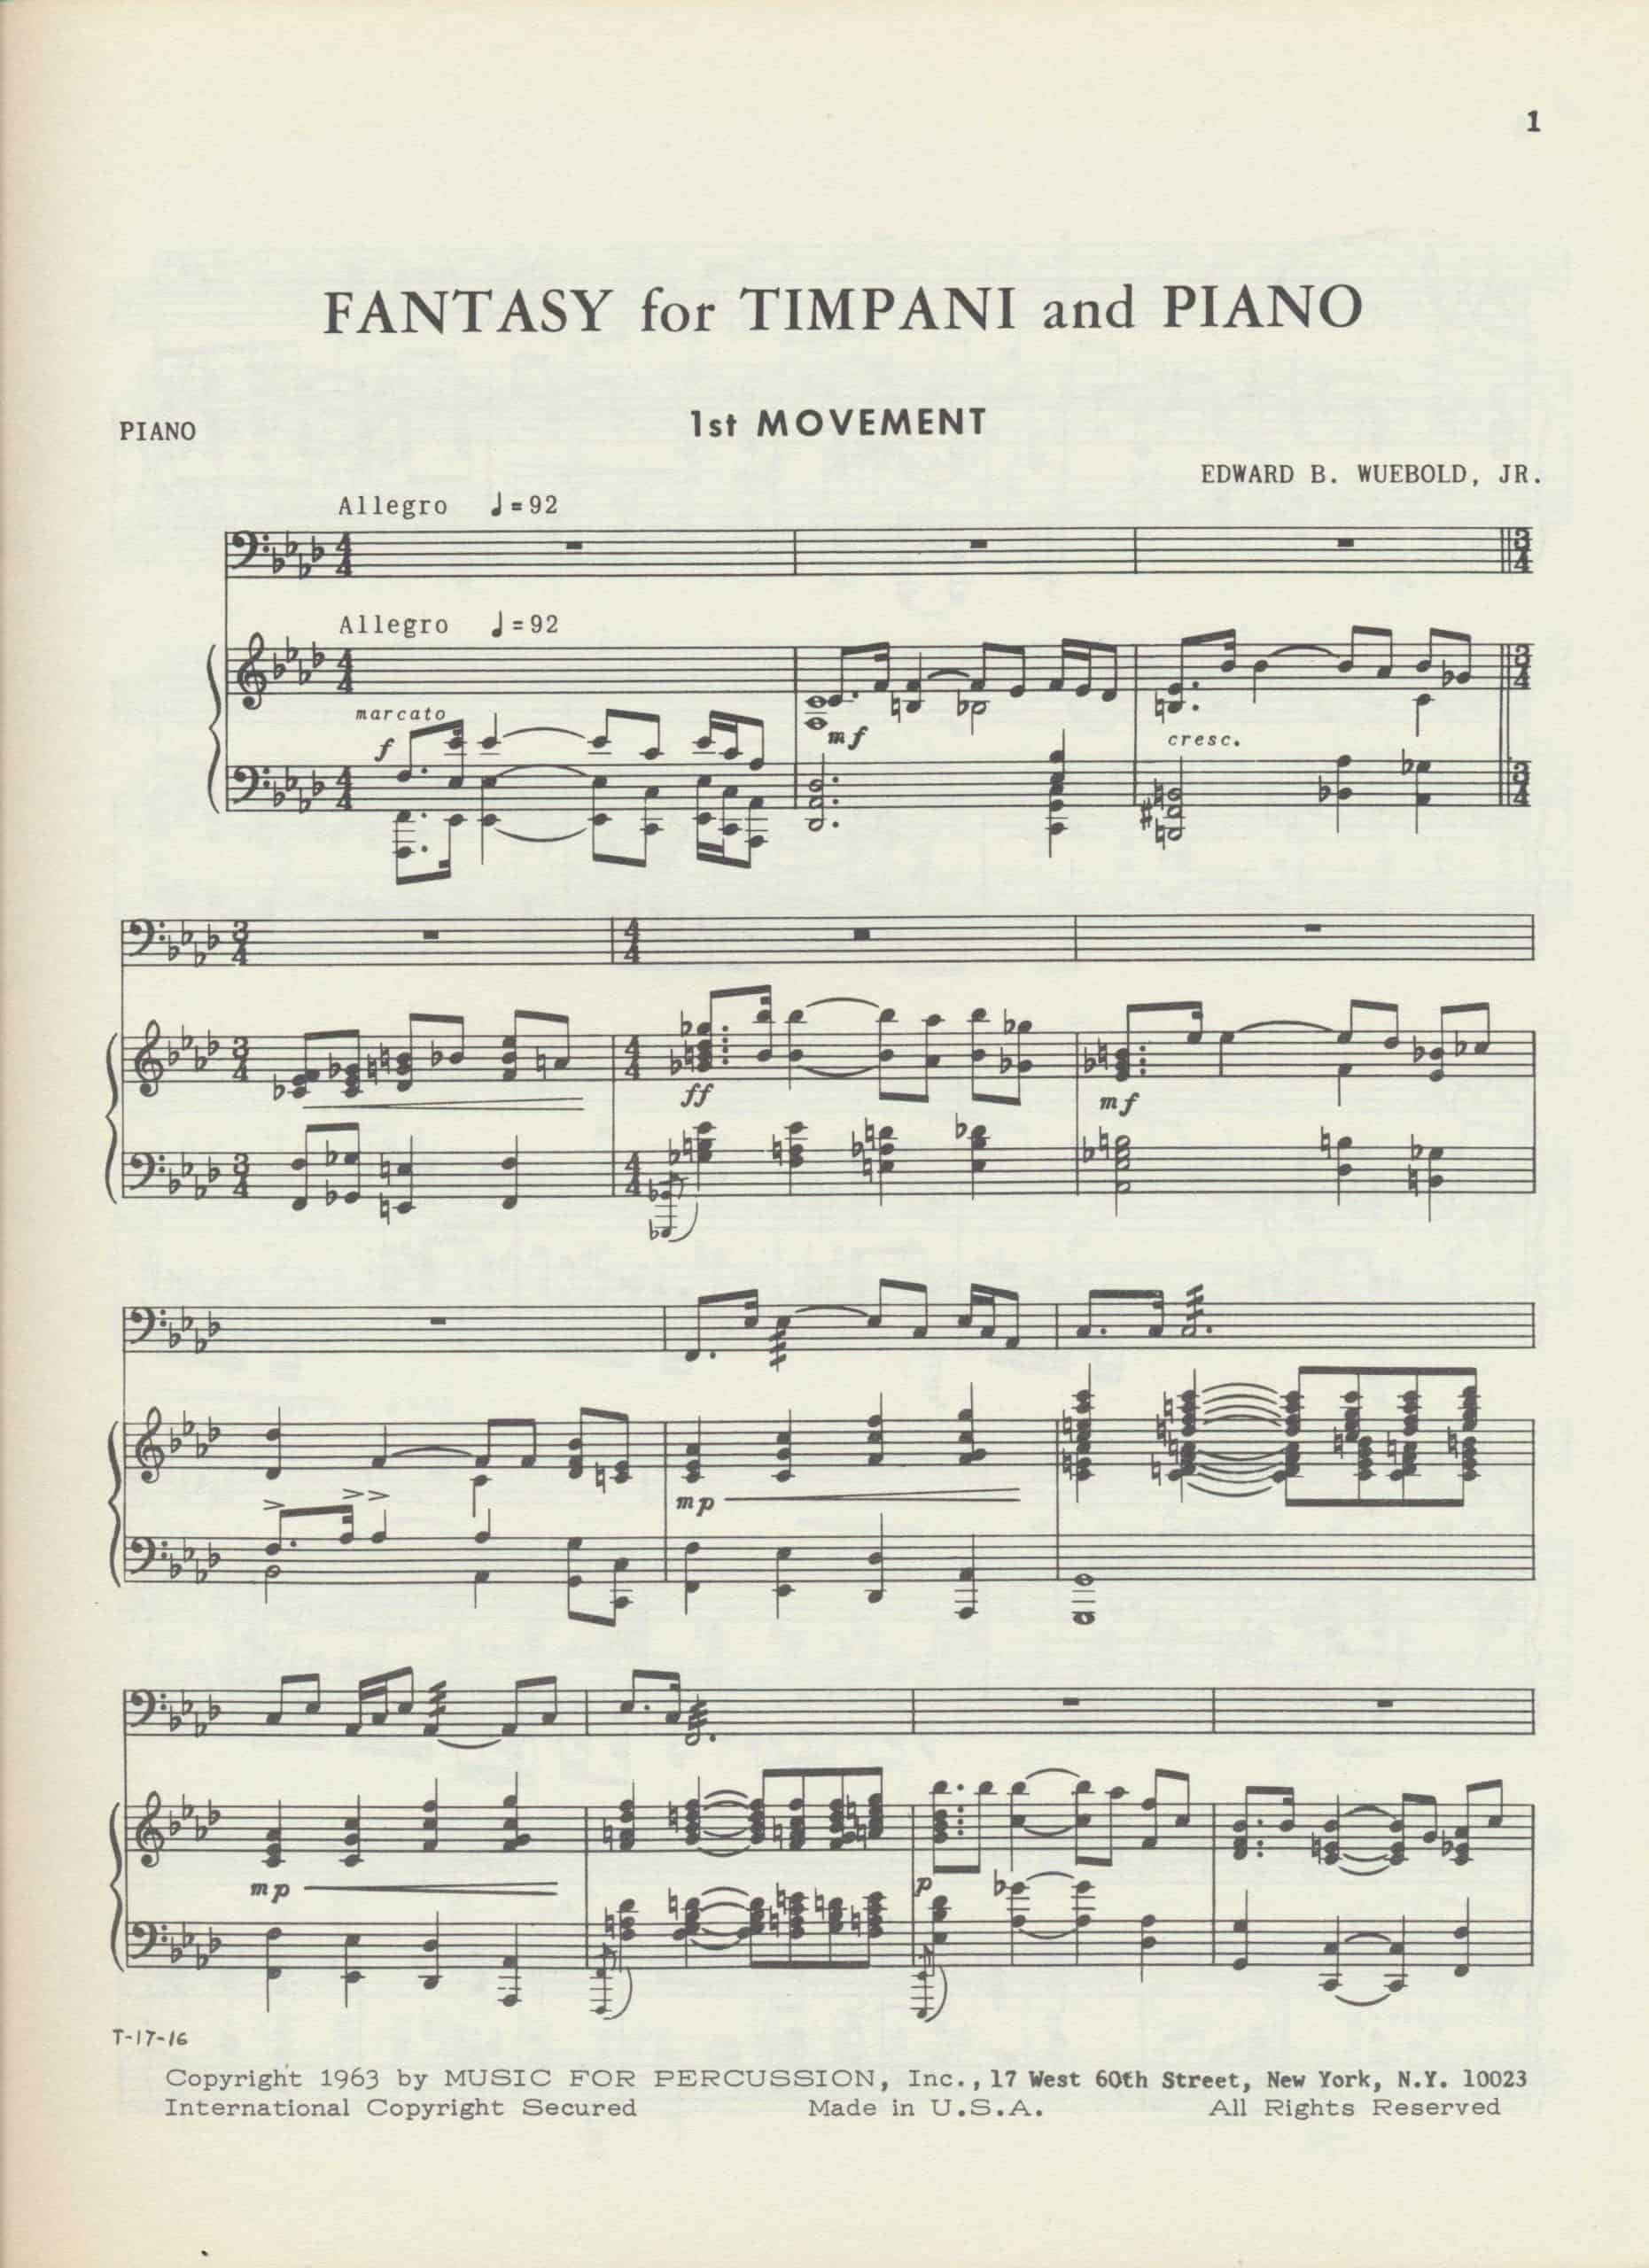 Fantasy for Timpani and Piano by Edwards B. Wuebold (JR.)